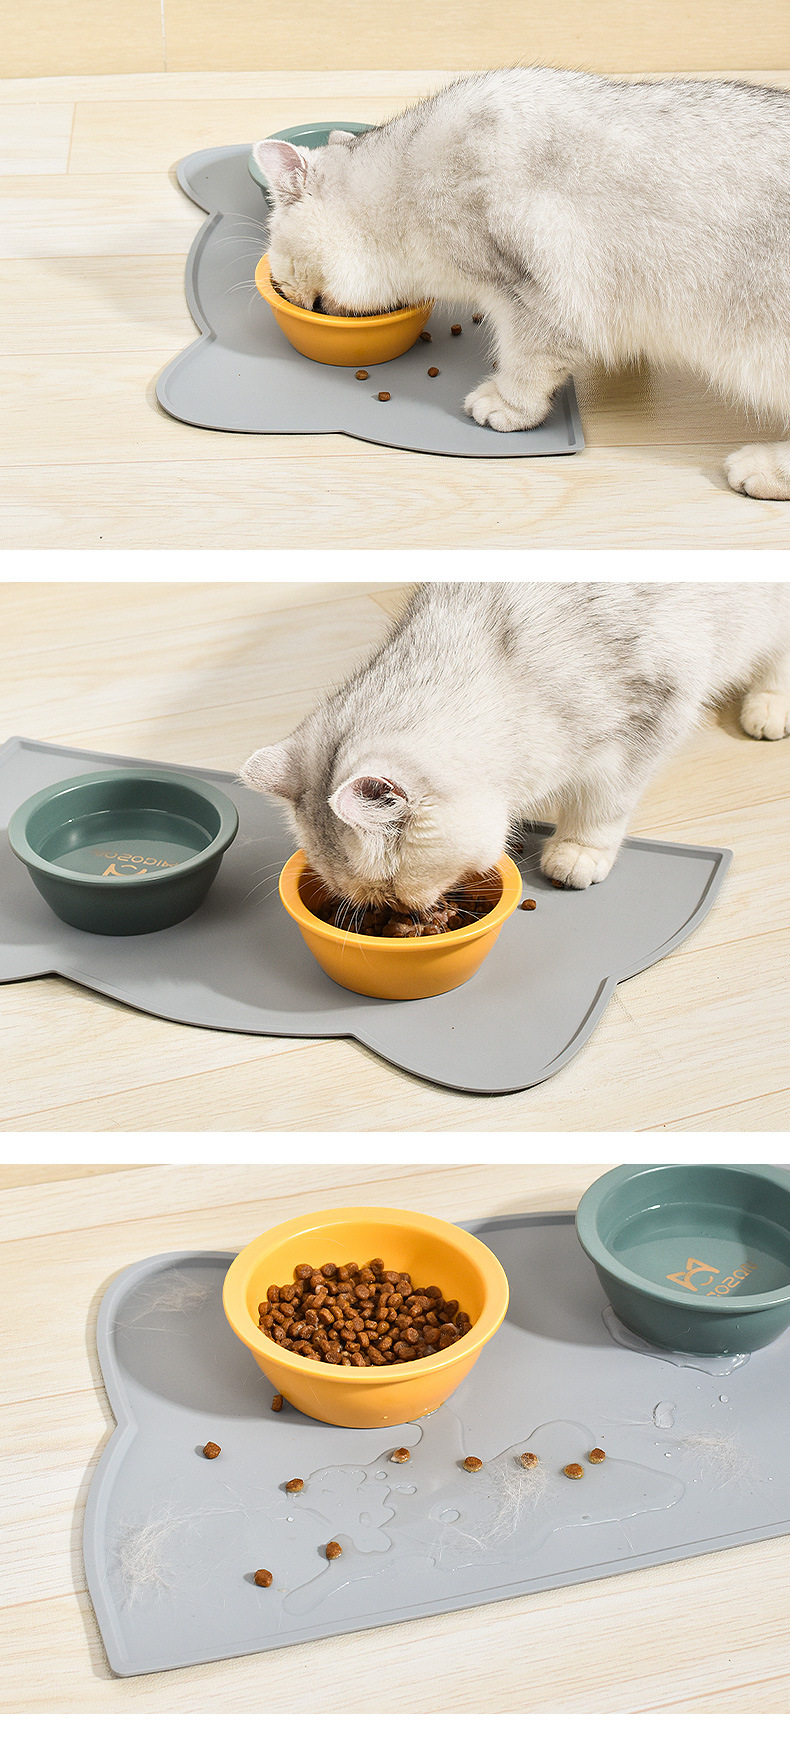 Pawise Silicone Placemat Dog Cat Bowl Mat Pet Feeding Pad